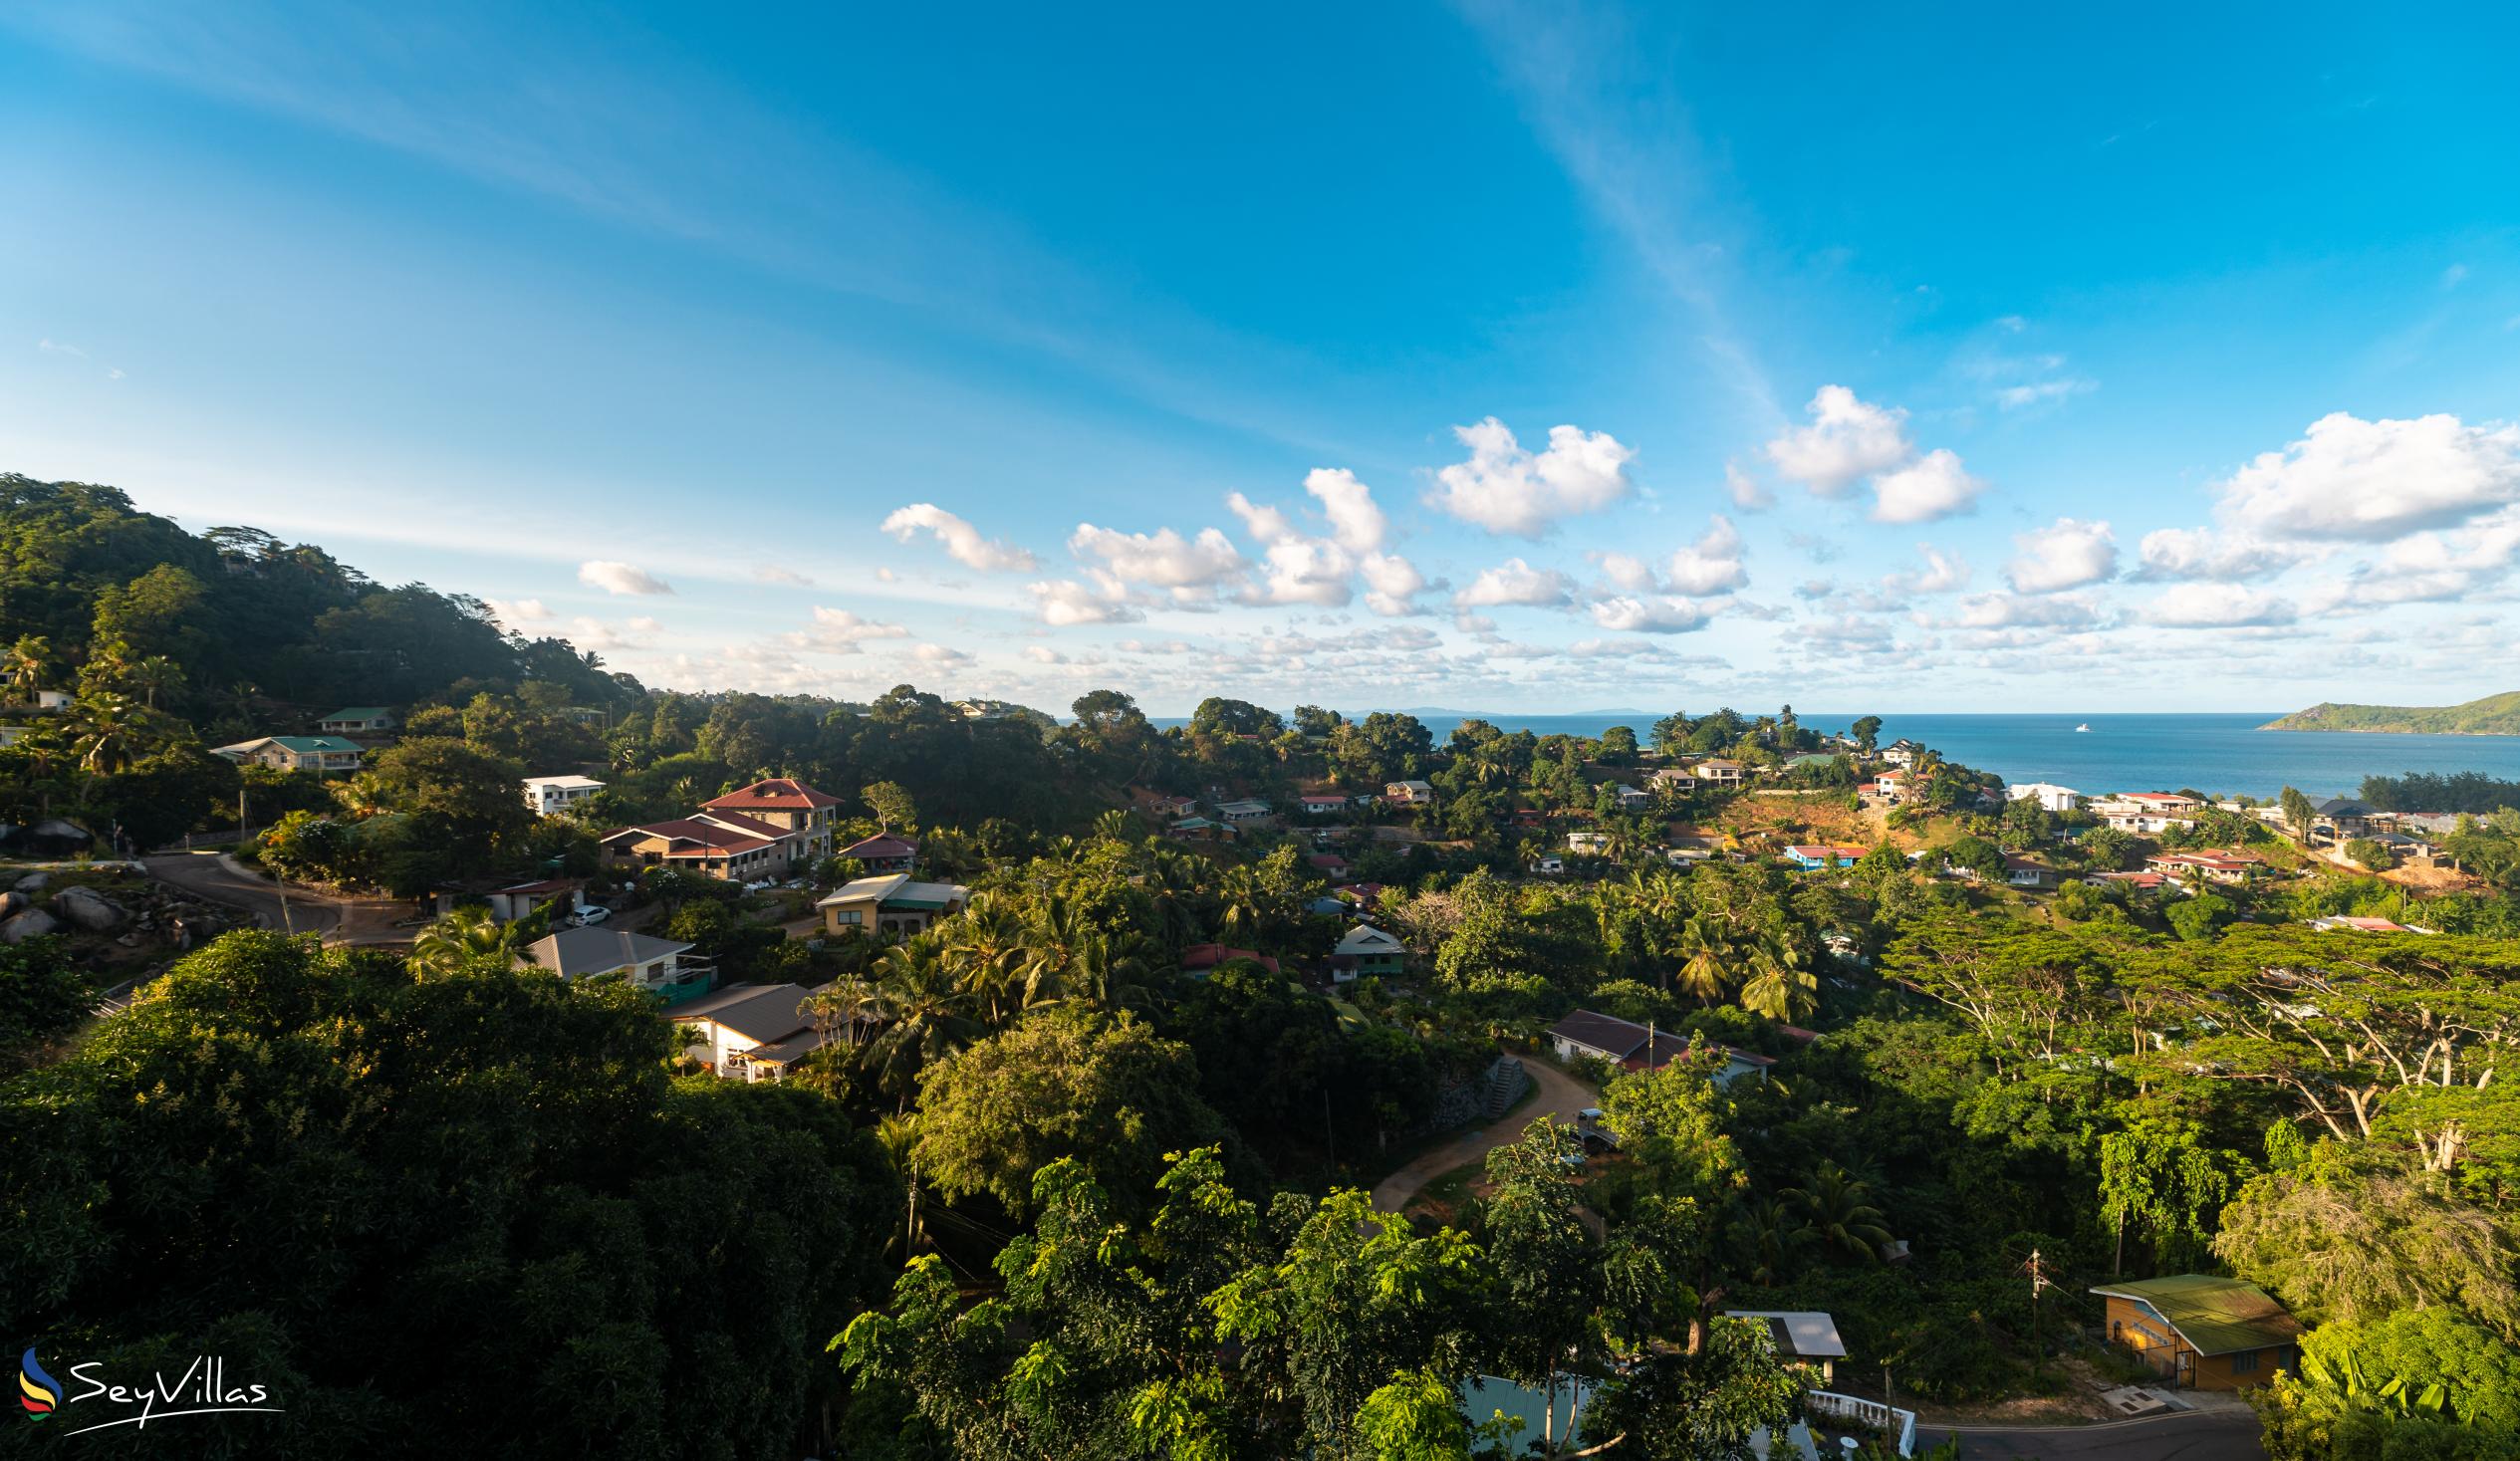 Foto 20: Maison L'Horizon - Posizione - Mahé (Seychelles)